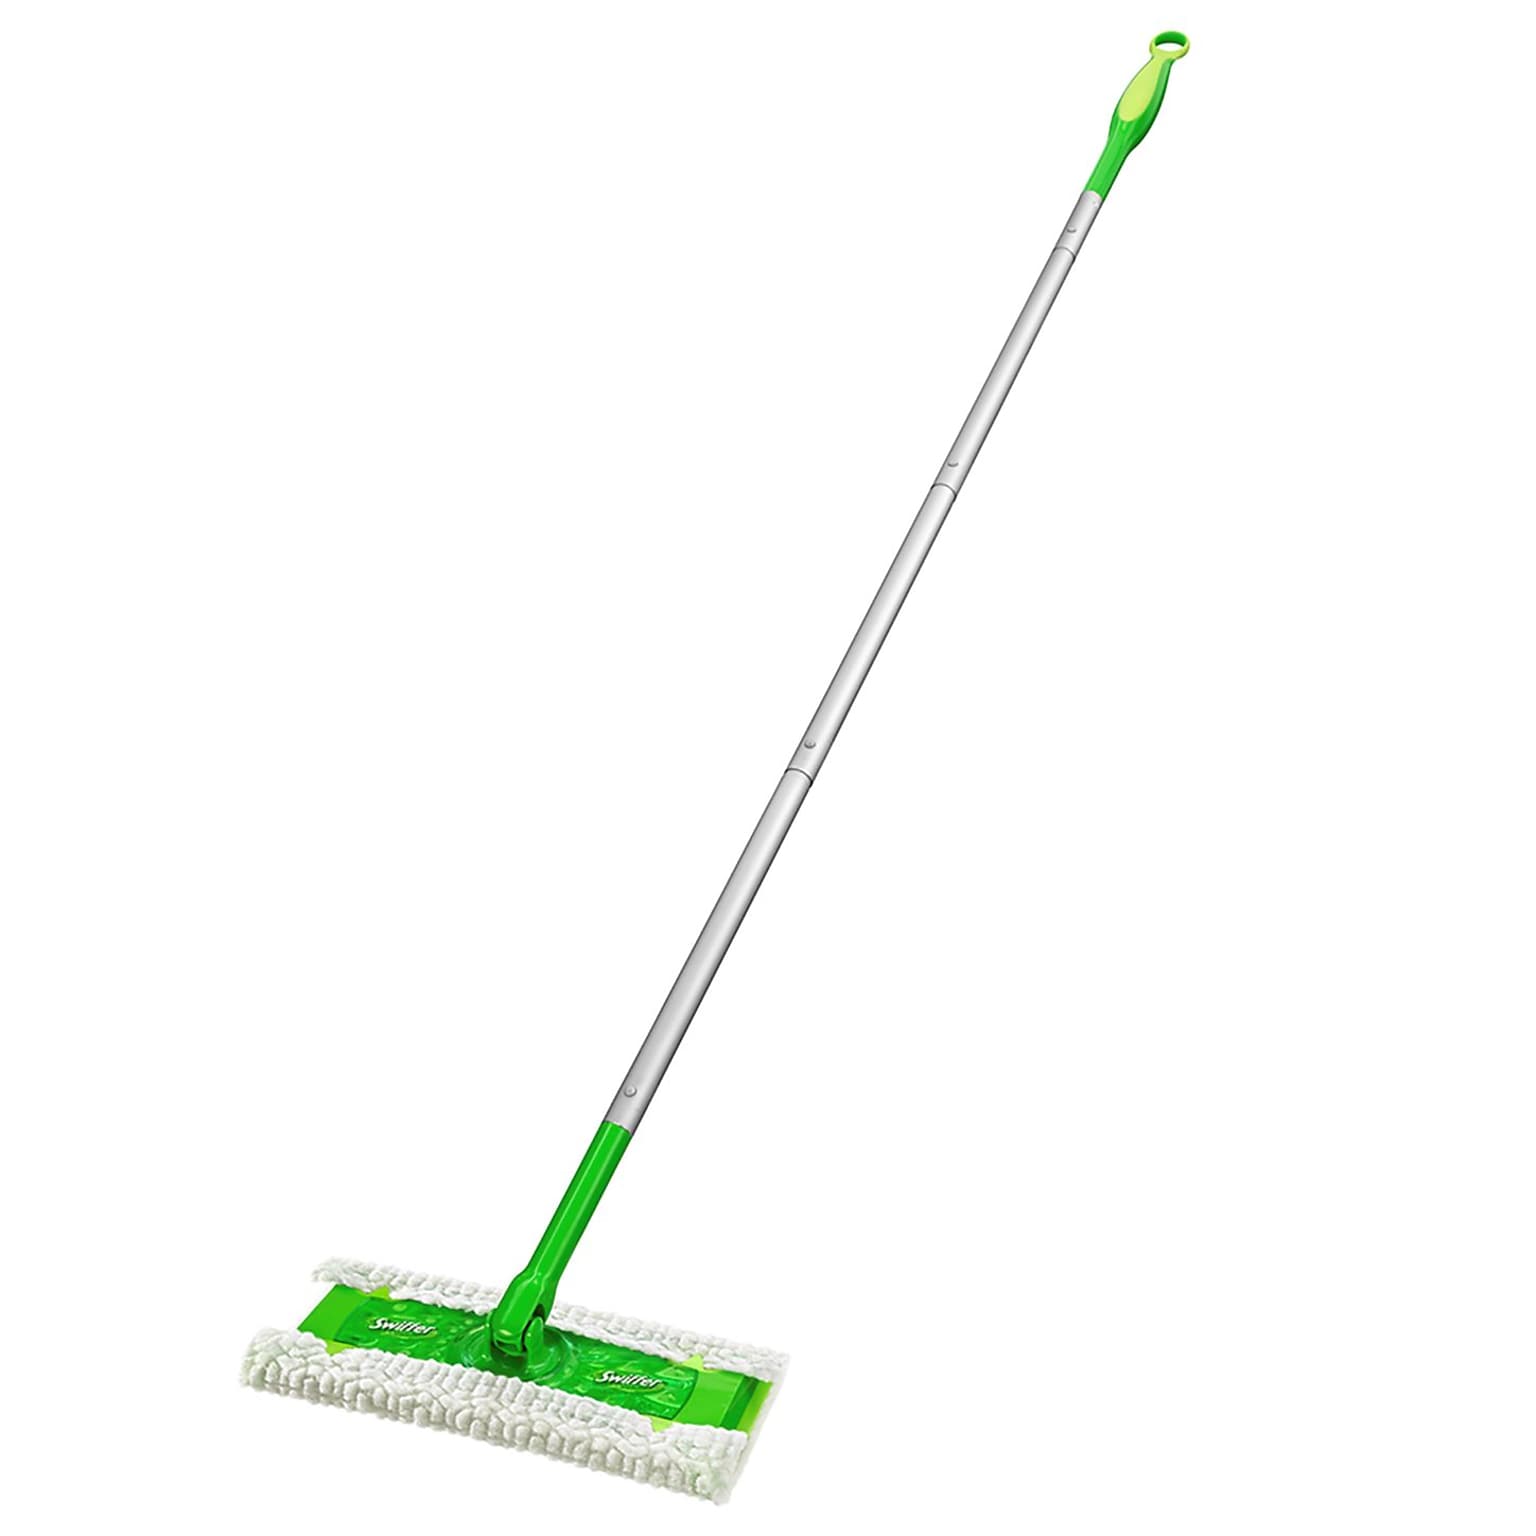 Swiffer Professional Duster Regular Sweeper, 10-Inch Wide Floor Dust Mop (9060)